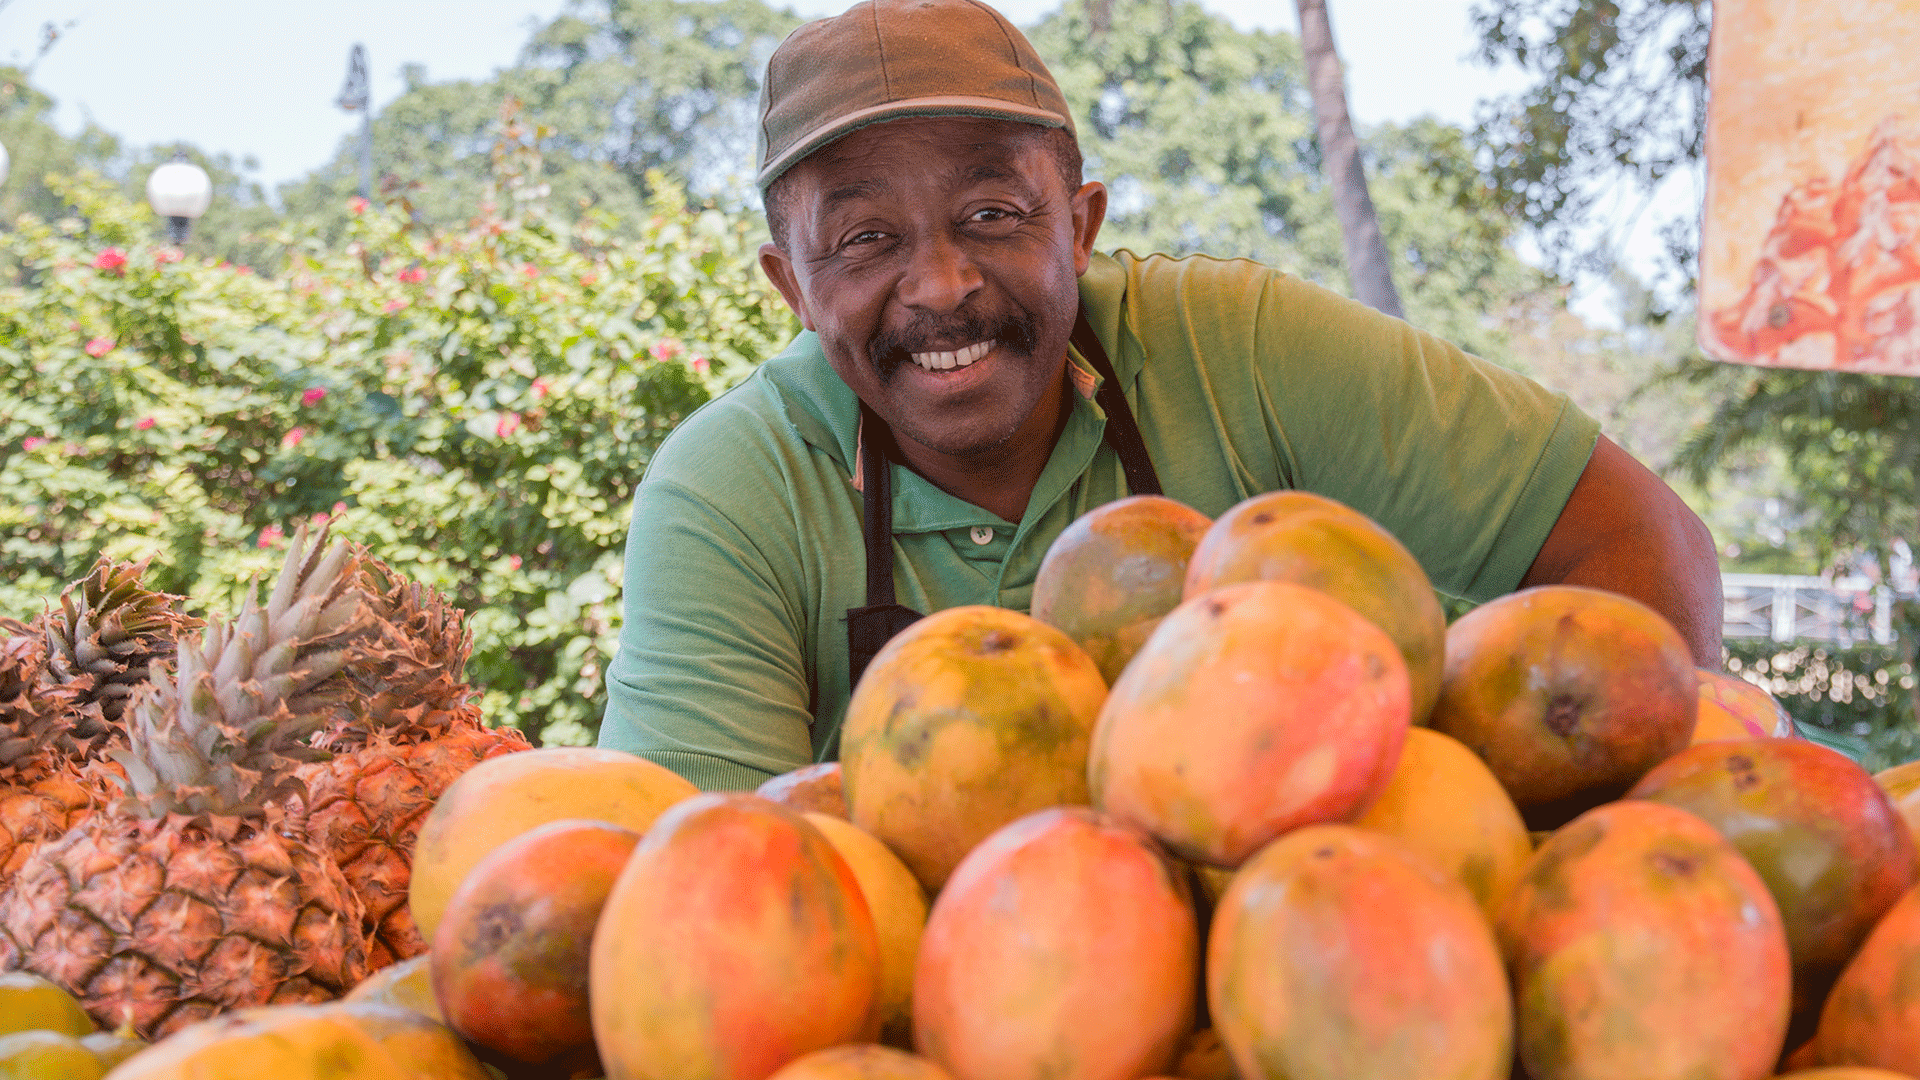 Fruit vendor in Havana, Cuba